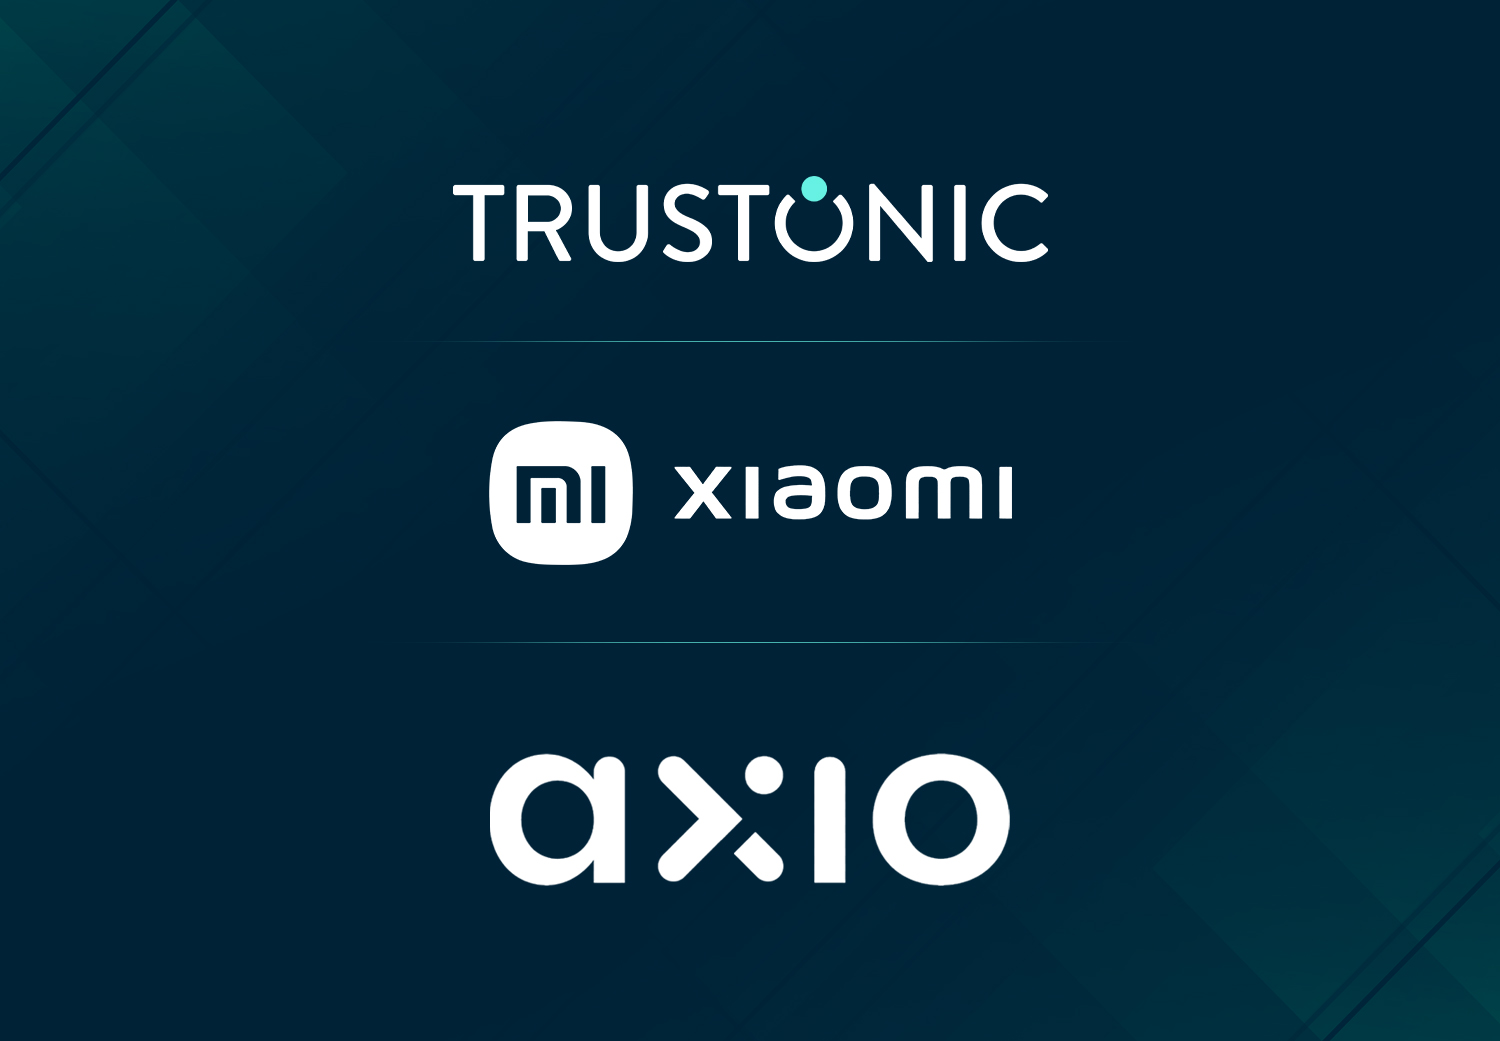 Trustonic, Xiaomi and Axio logos